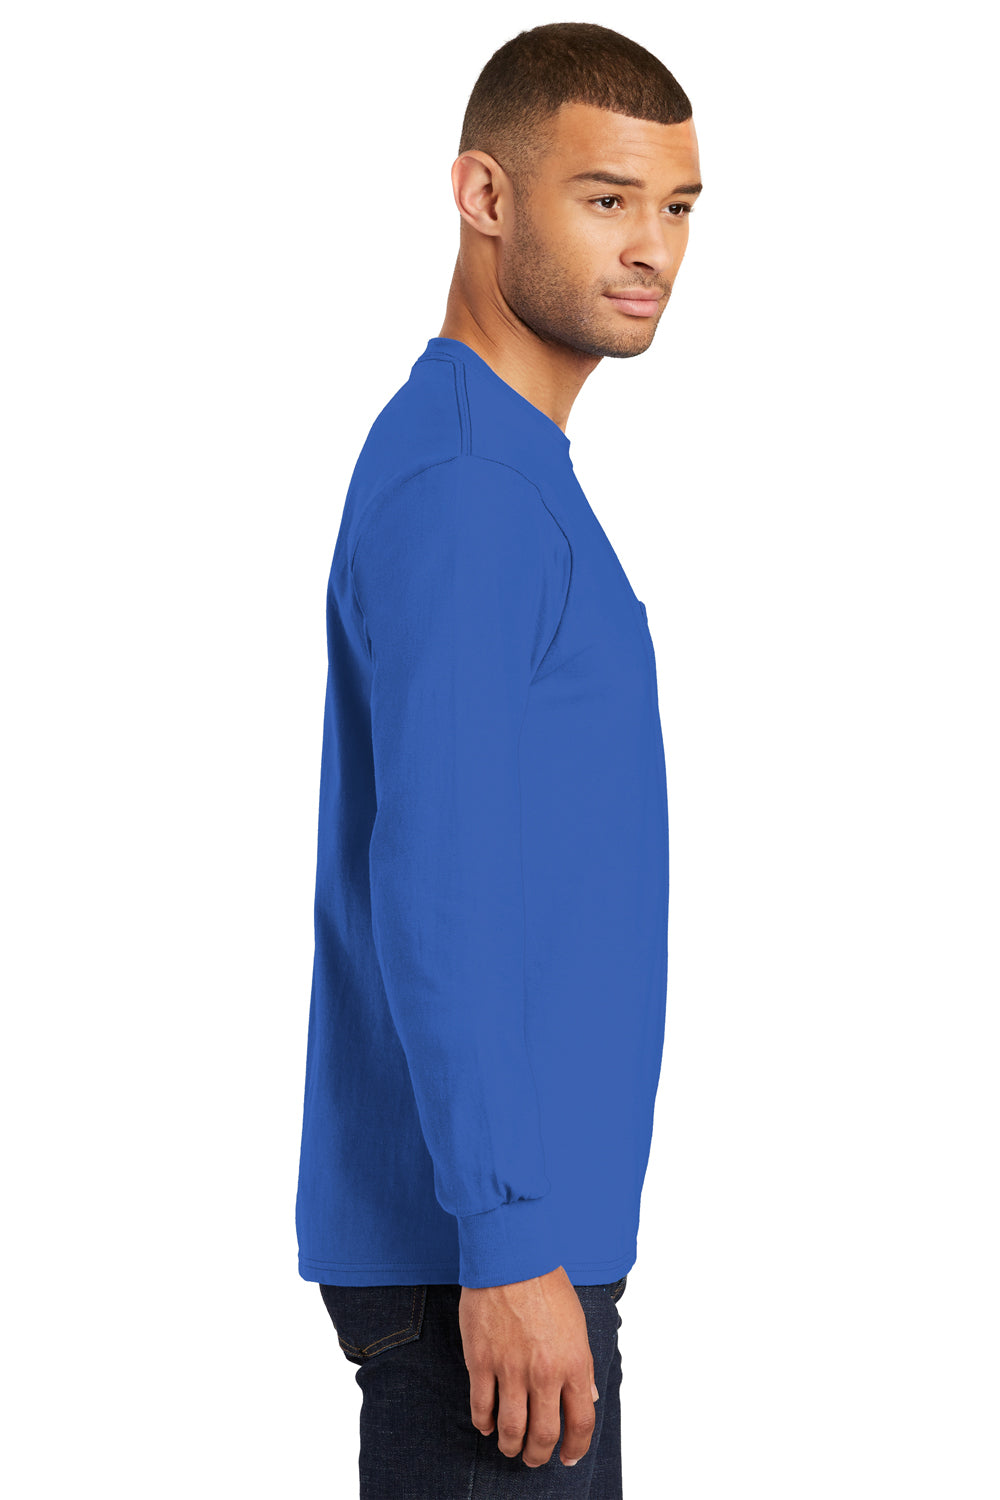 Port & Company PC61LSP Mens Essential Long Sleeve Crewneck T-Shirt w/ Pocket Royal Blue Side